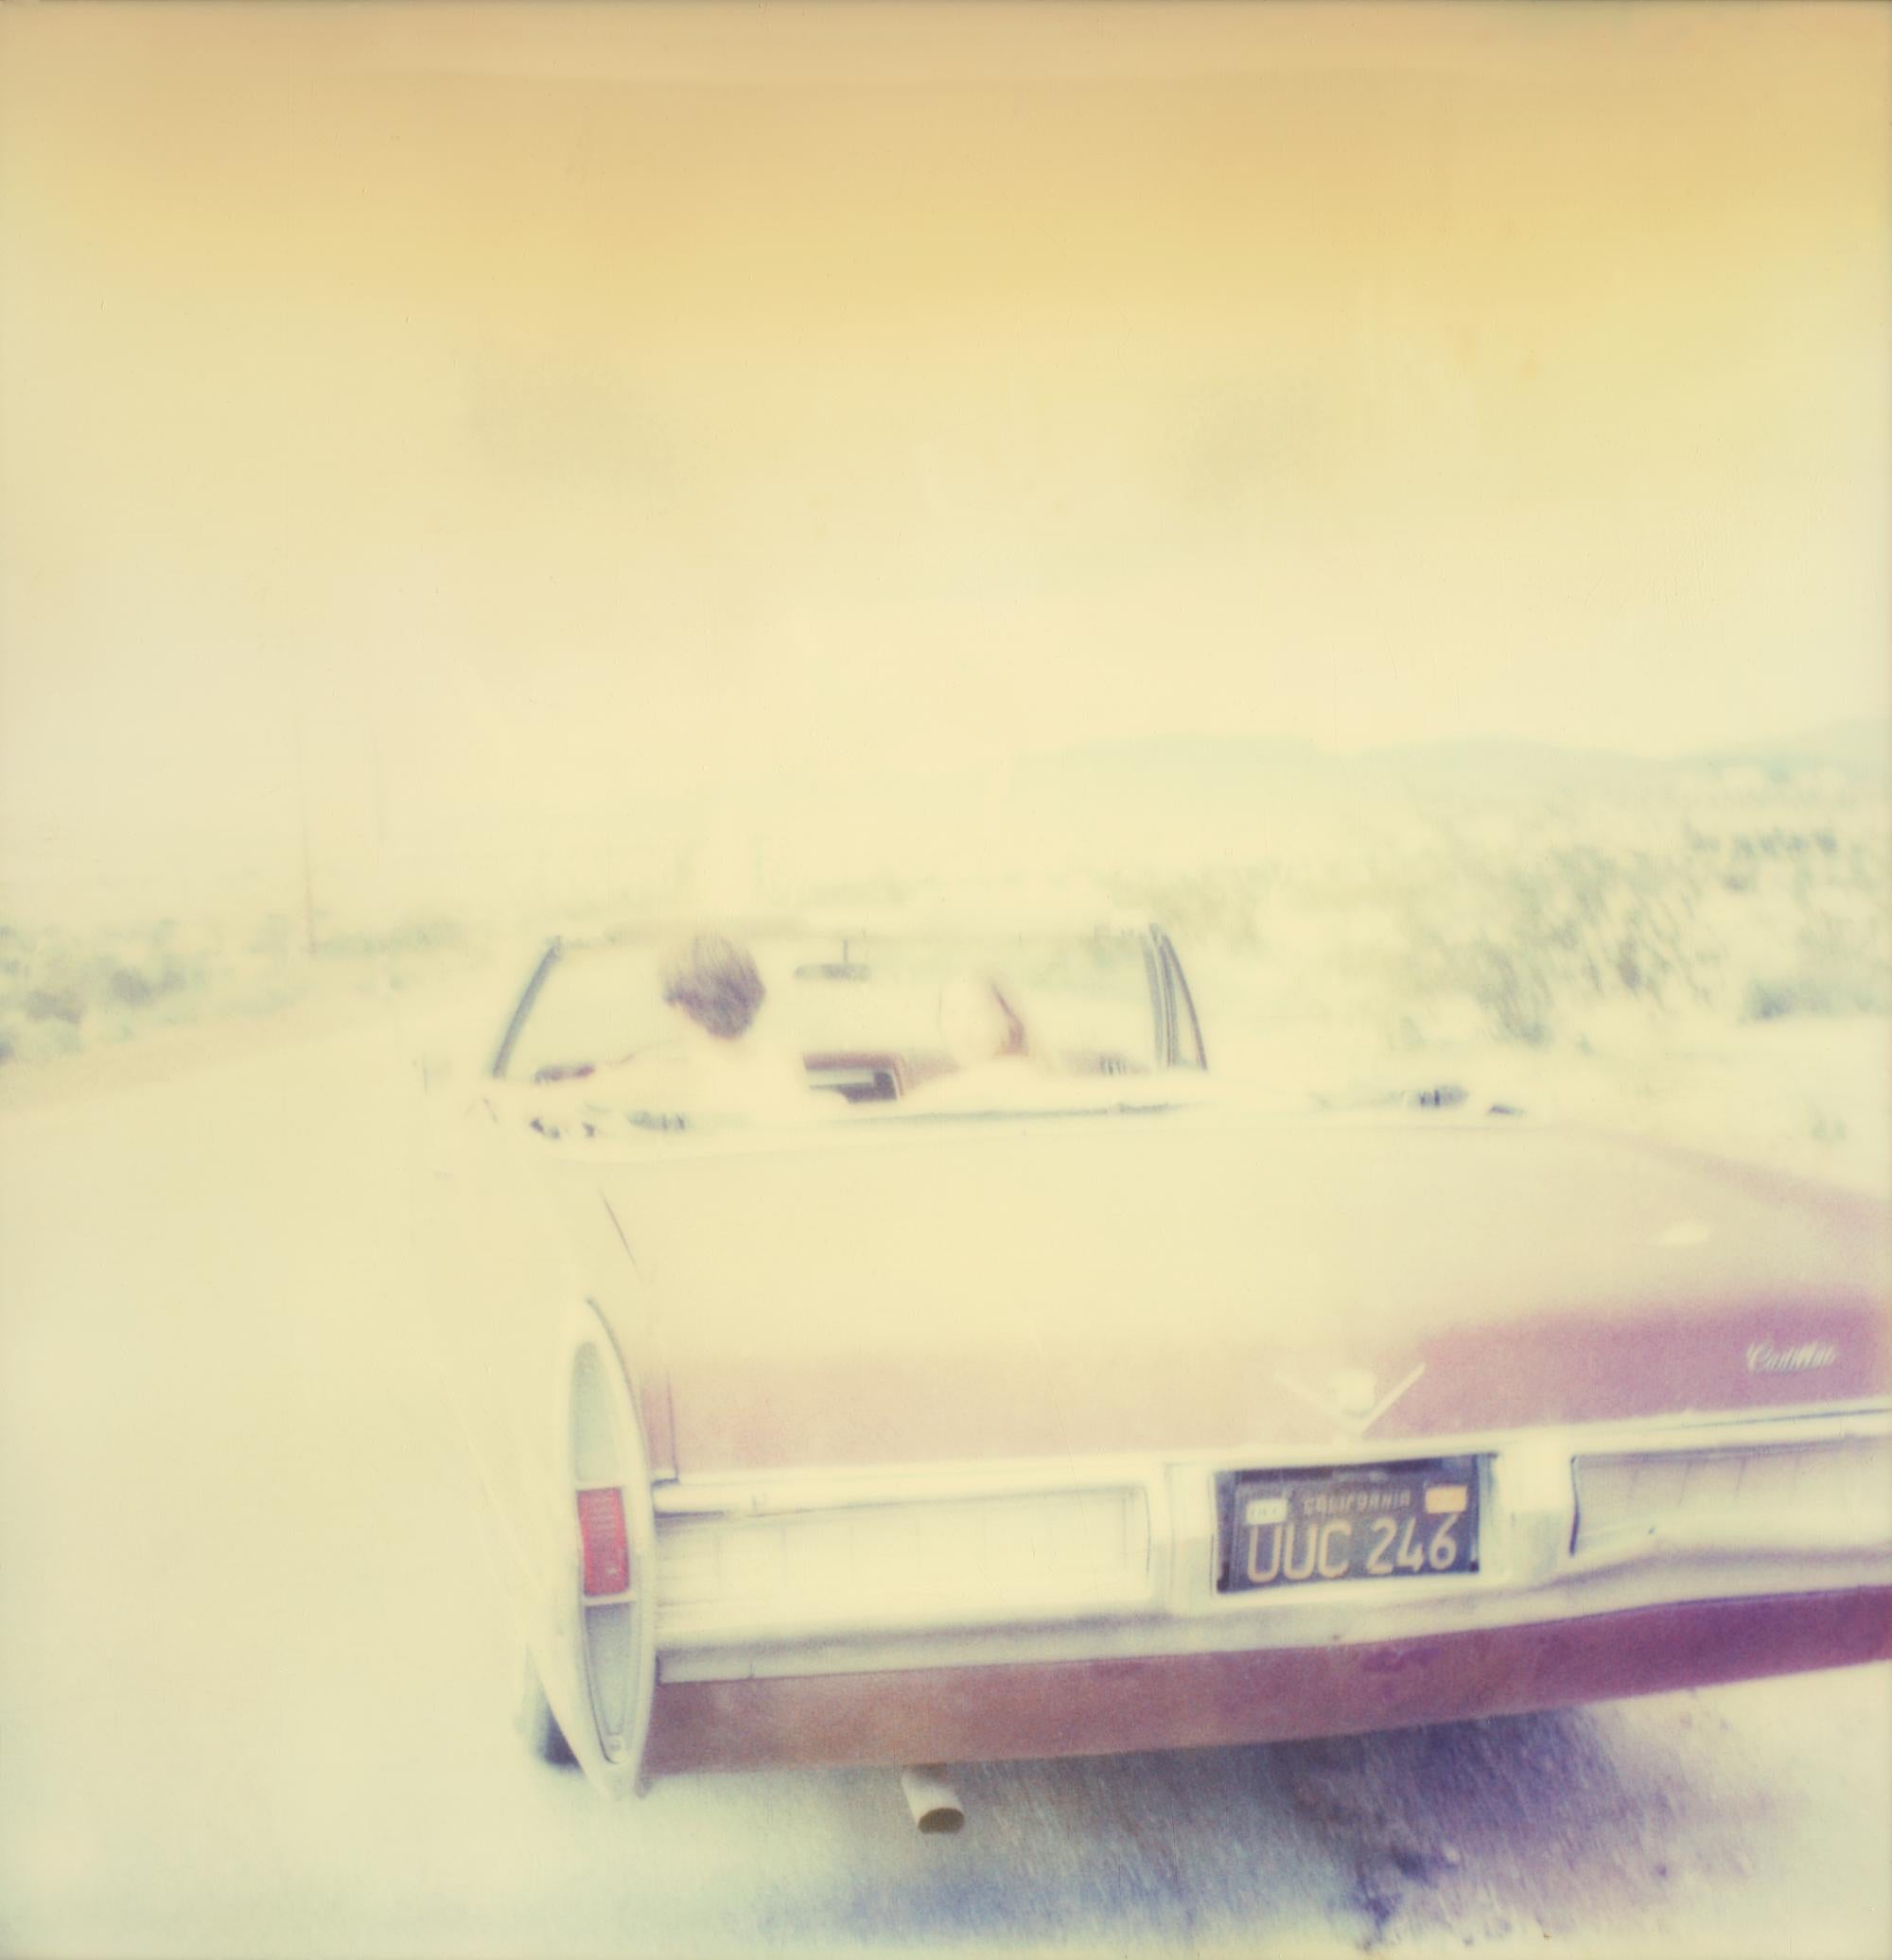 Leaving III (Sidewinder) - Polaroid, 21° secolo, Contemporaneo - Photograph di Stefanie Schneider